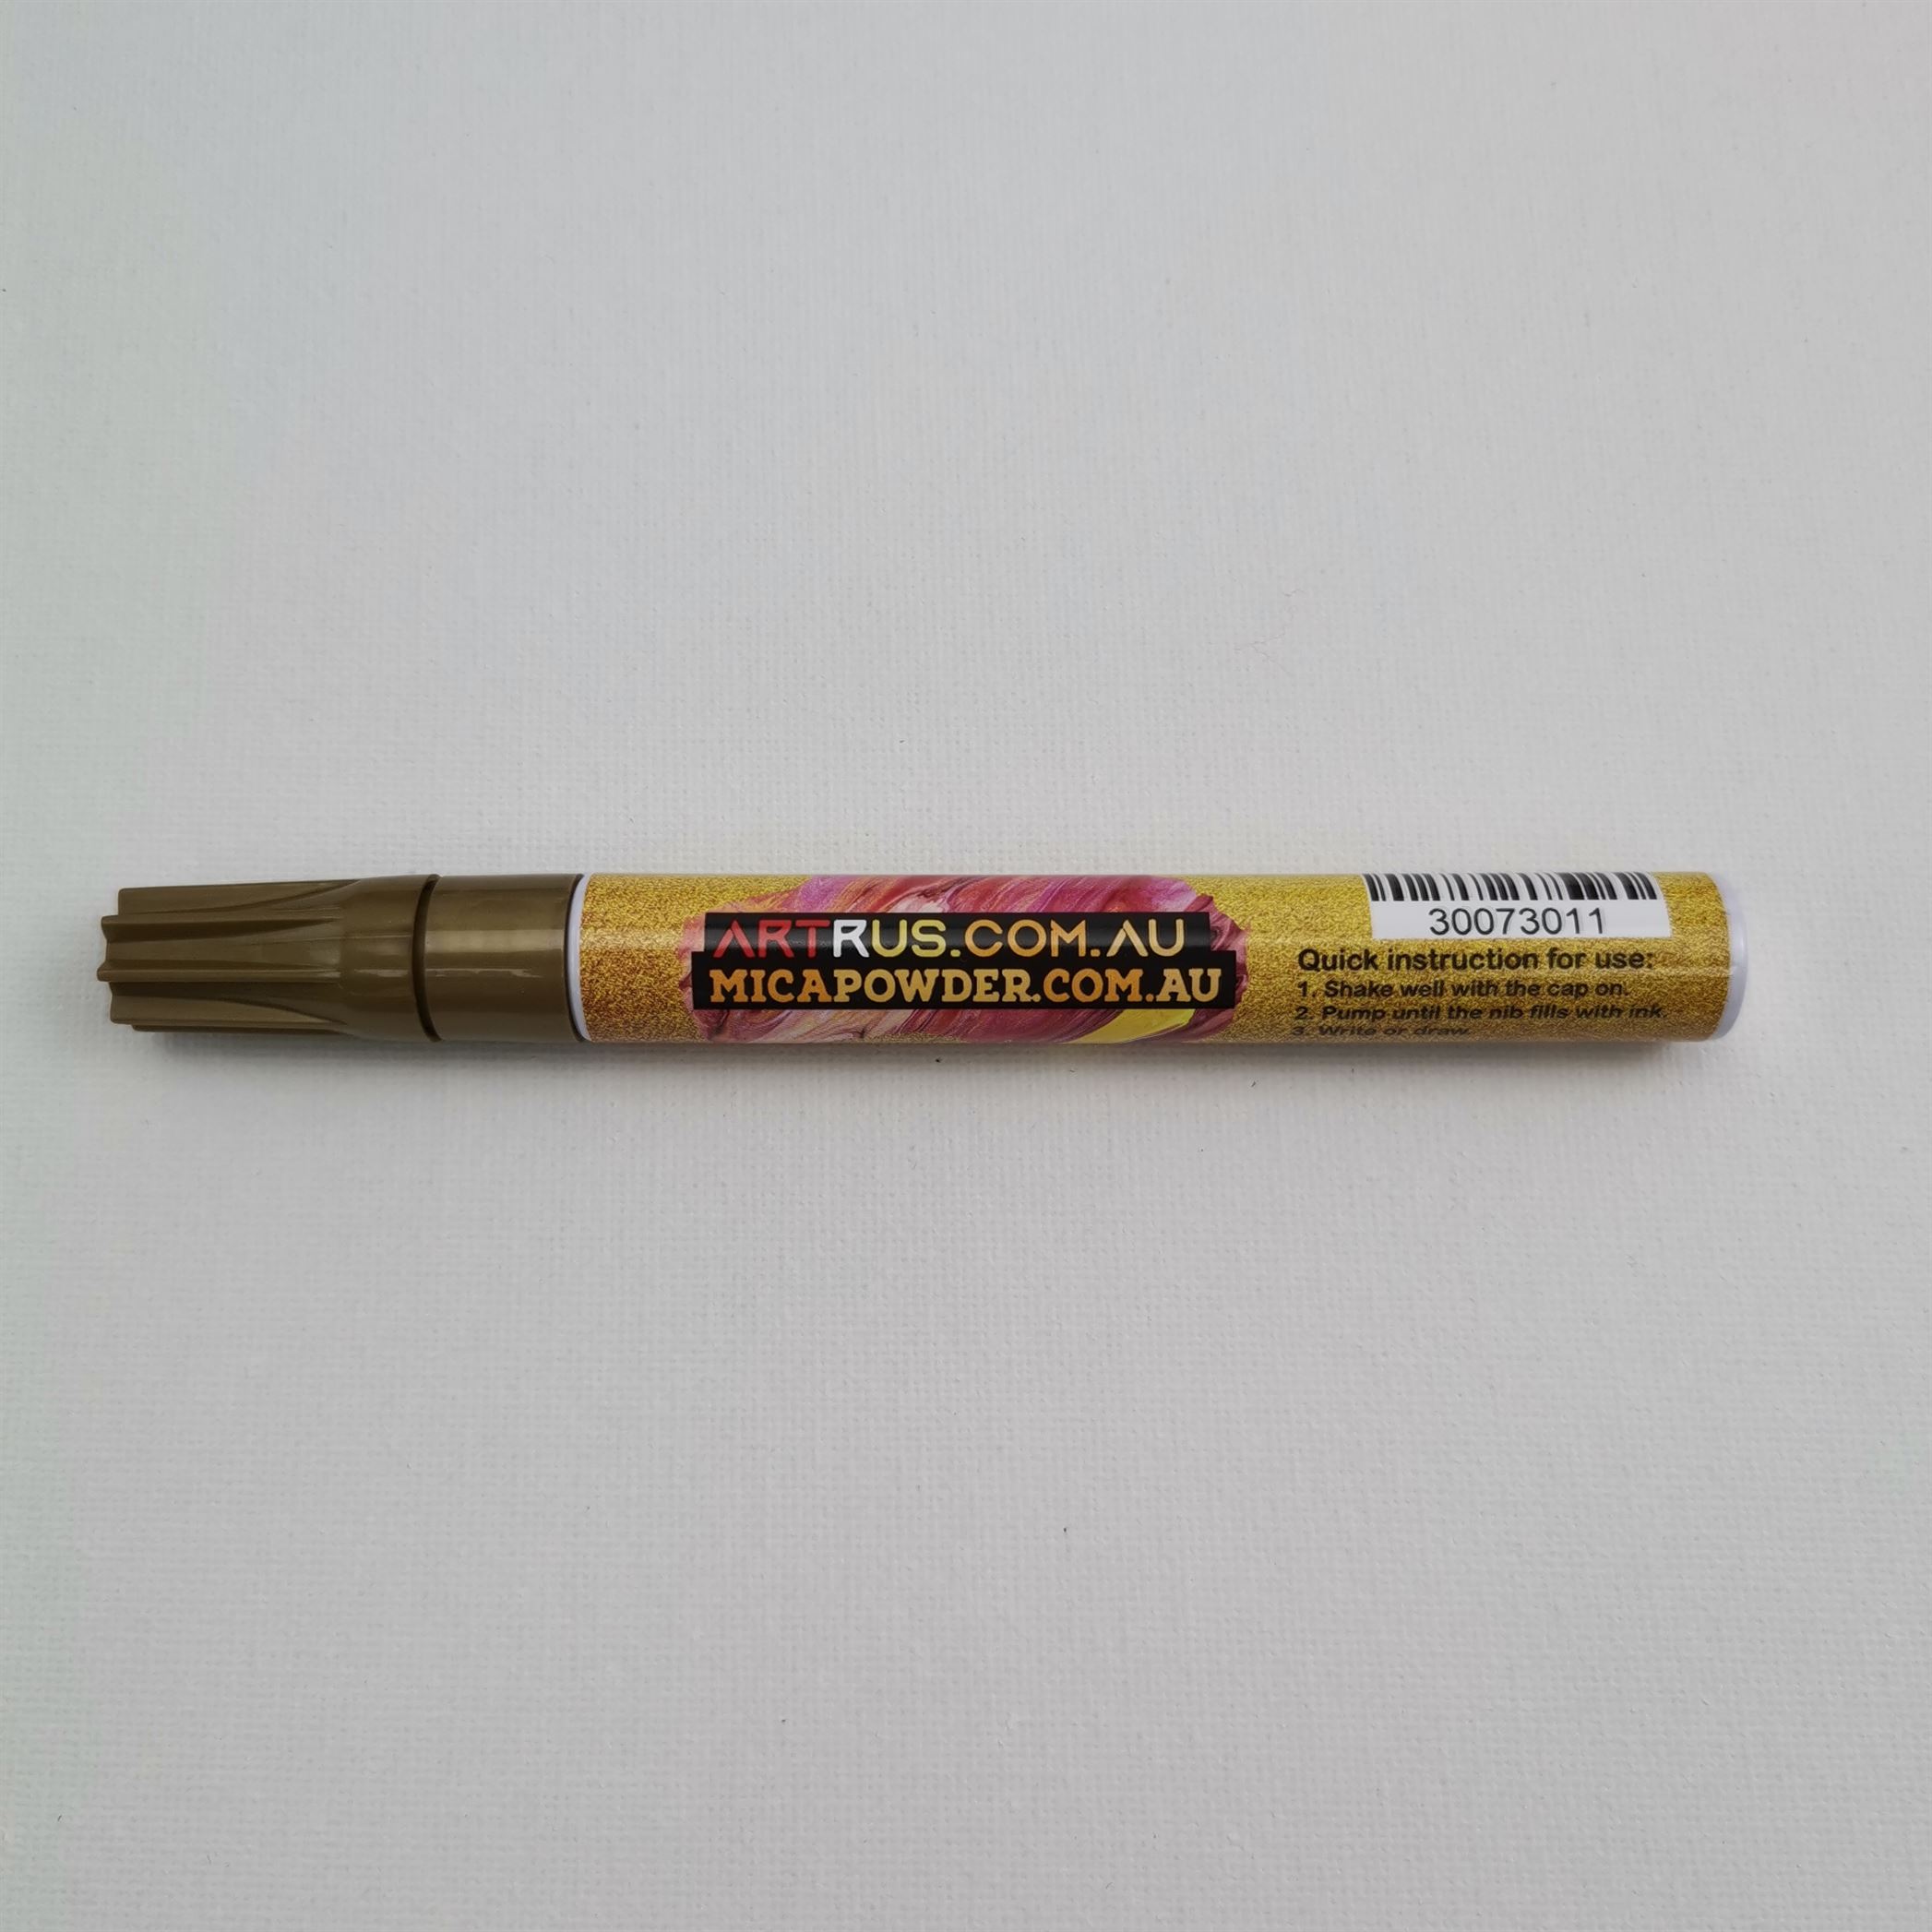 Metalic-Gold-Pen.jpg